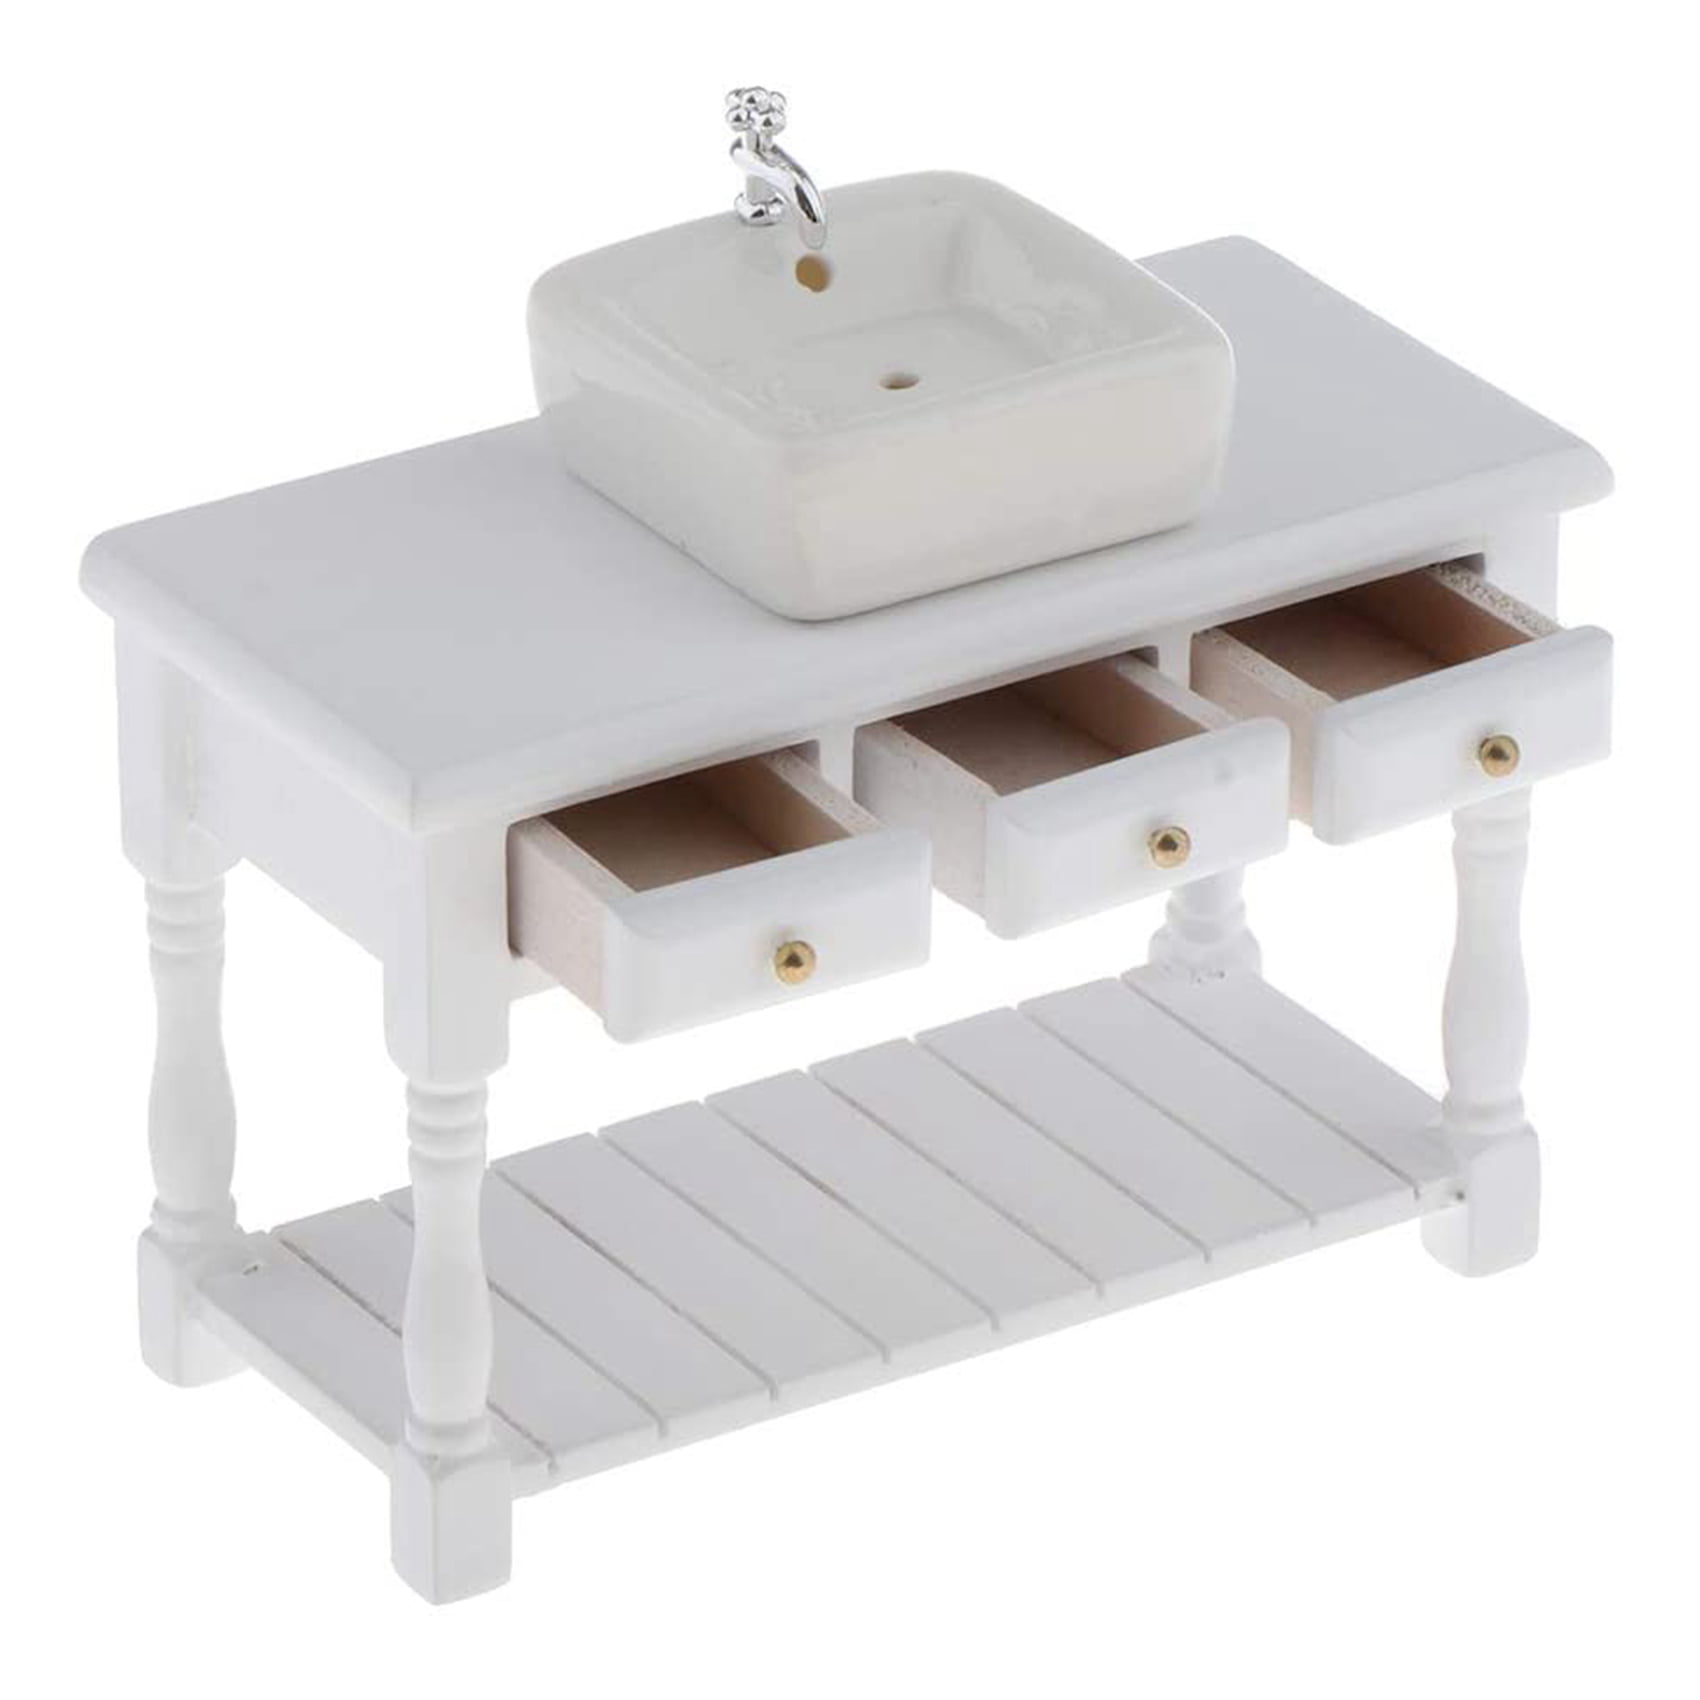 1/12 Dollhouse Miniature Bathroom Furniture Ceramic Hand Basin Sink w/ Cloth 